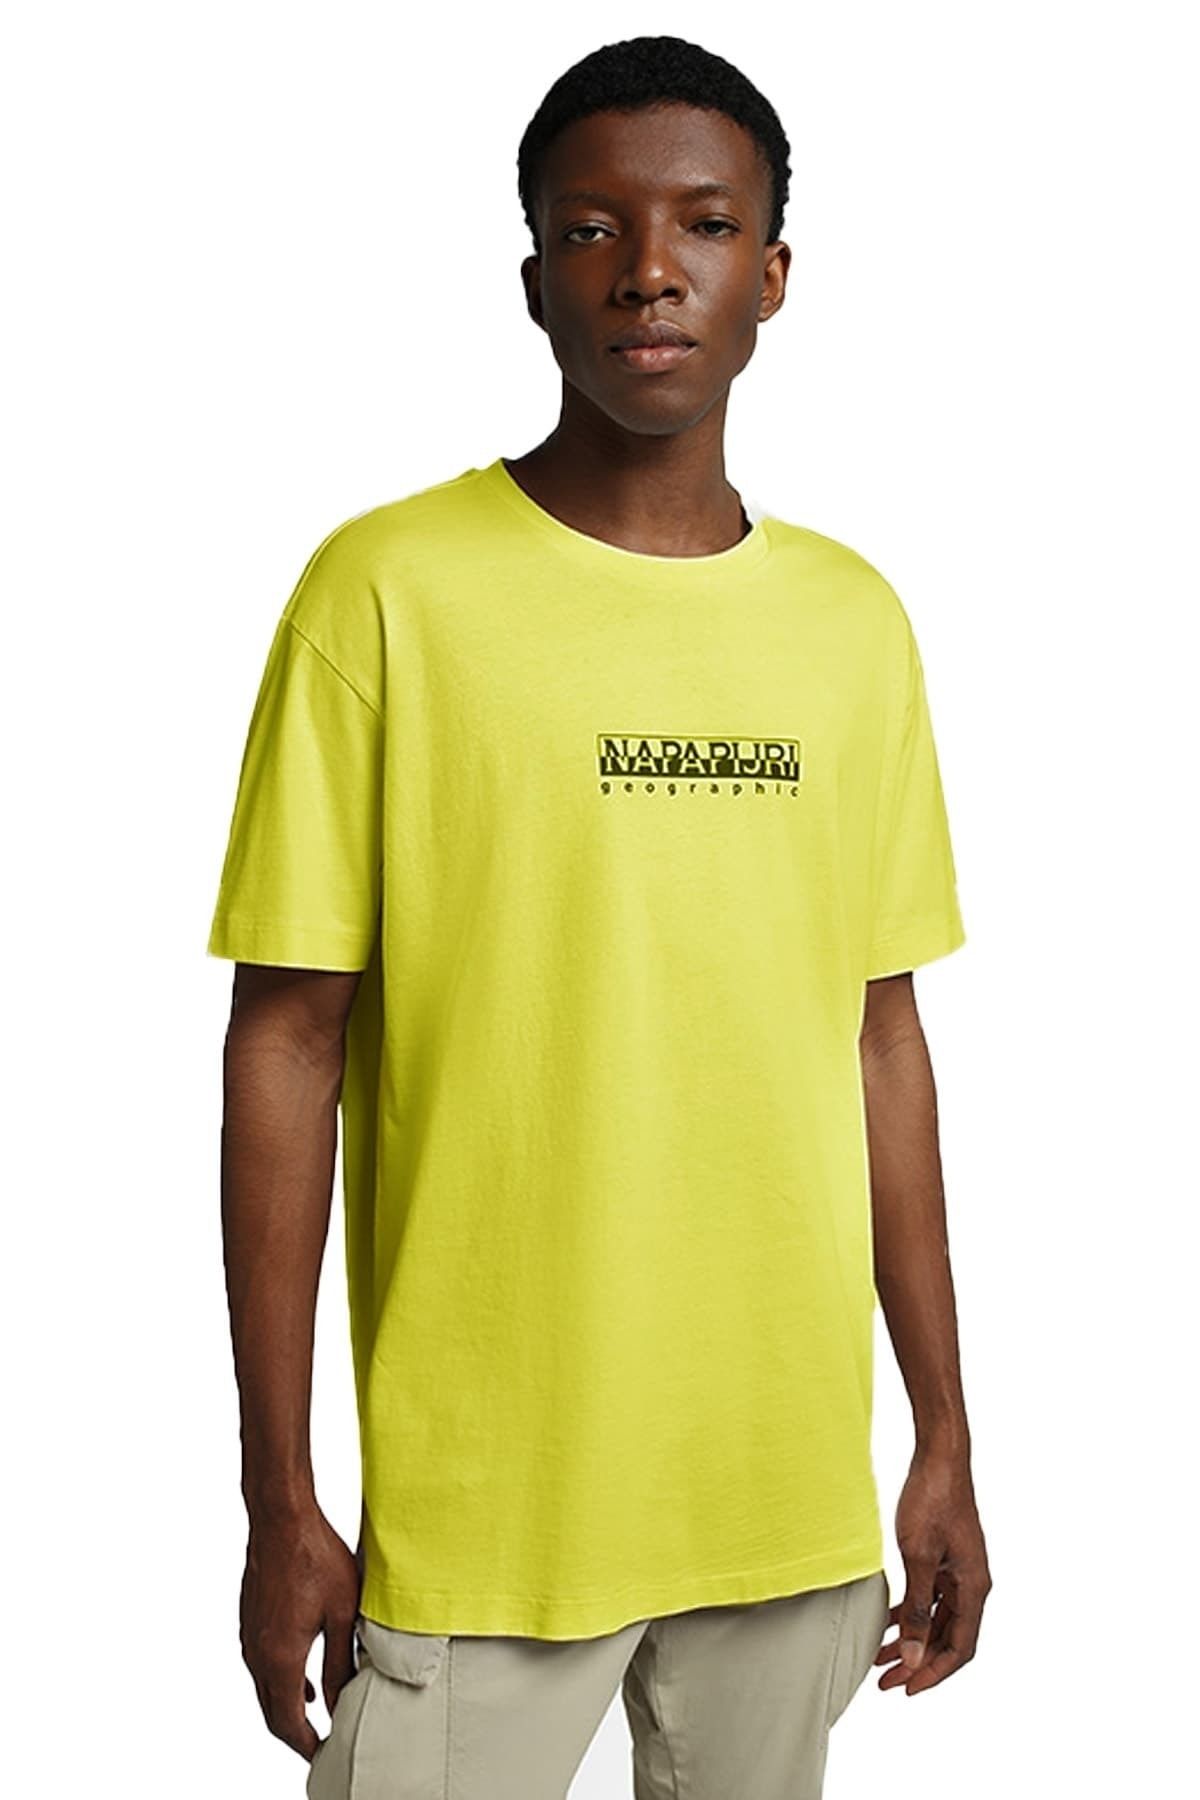 Napapijri S-box Ss 3 Erkek T-shirt - Np0a4gdr